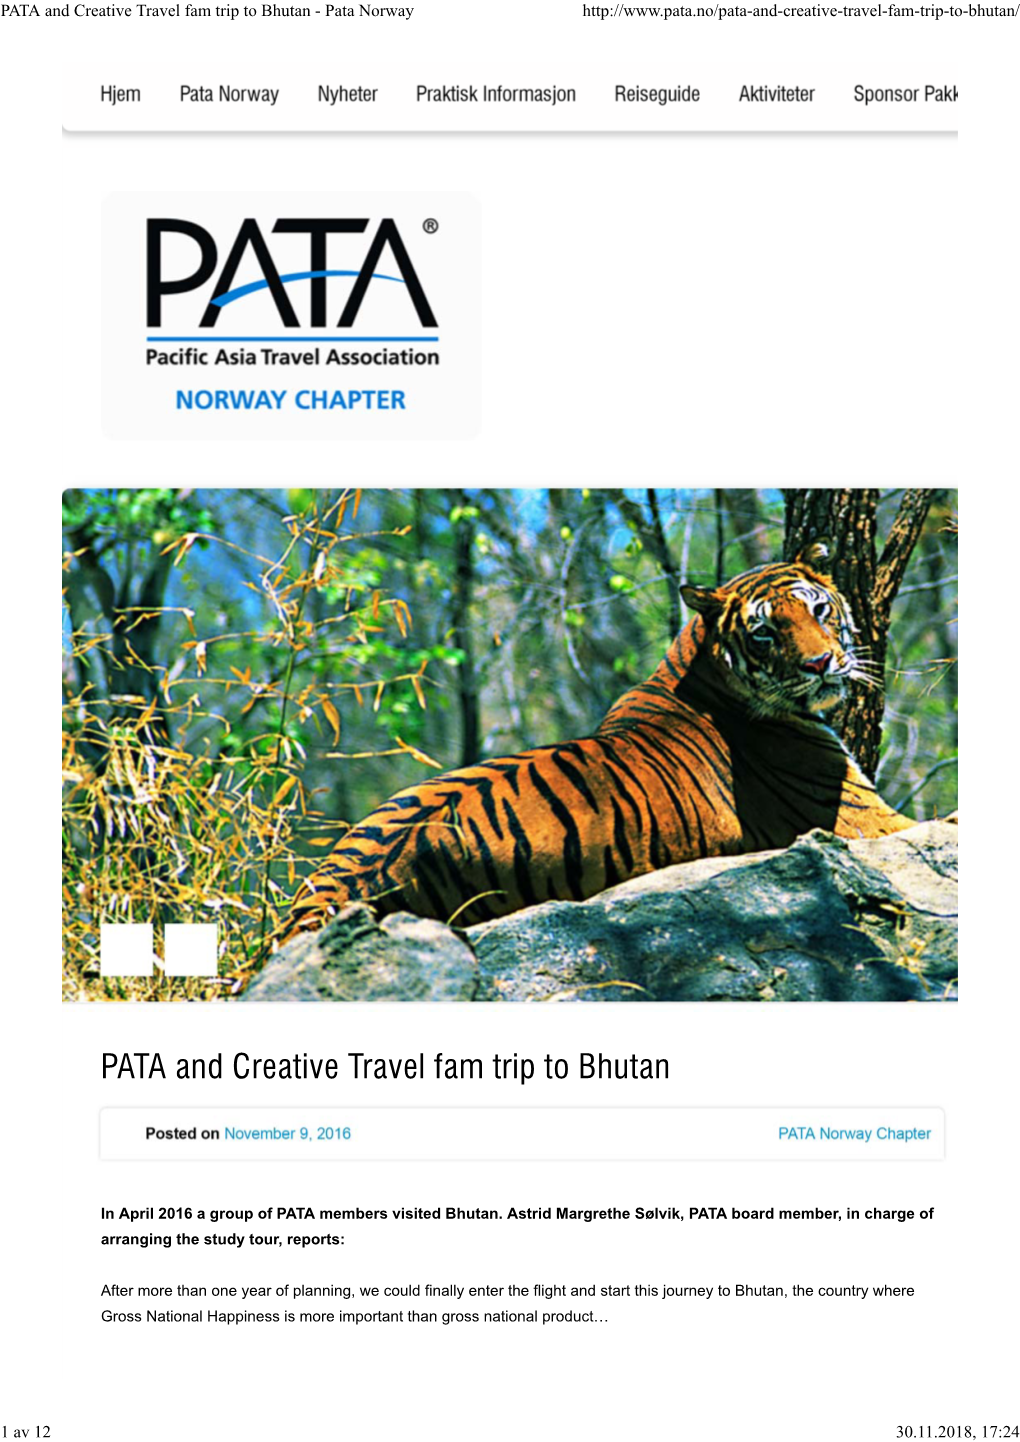 PATA and Creative Travel Fam Trip to Bhutan - Pata Norway